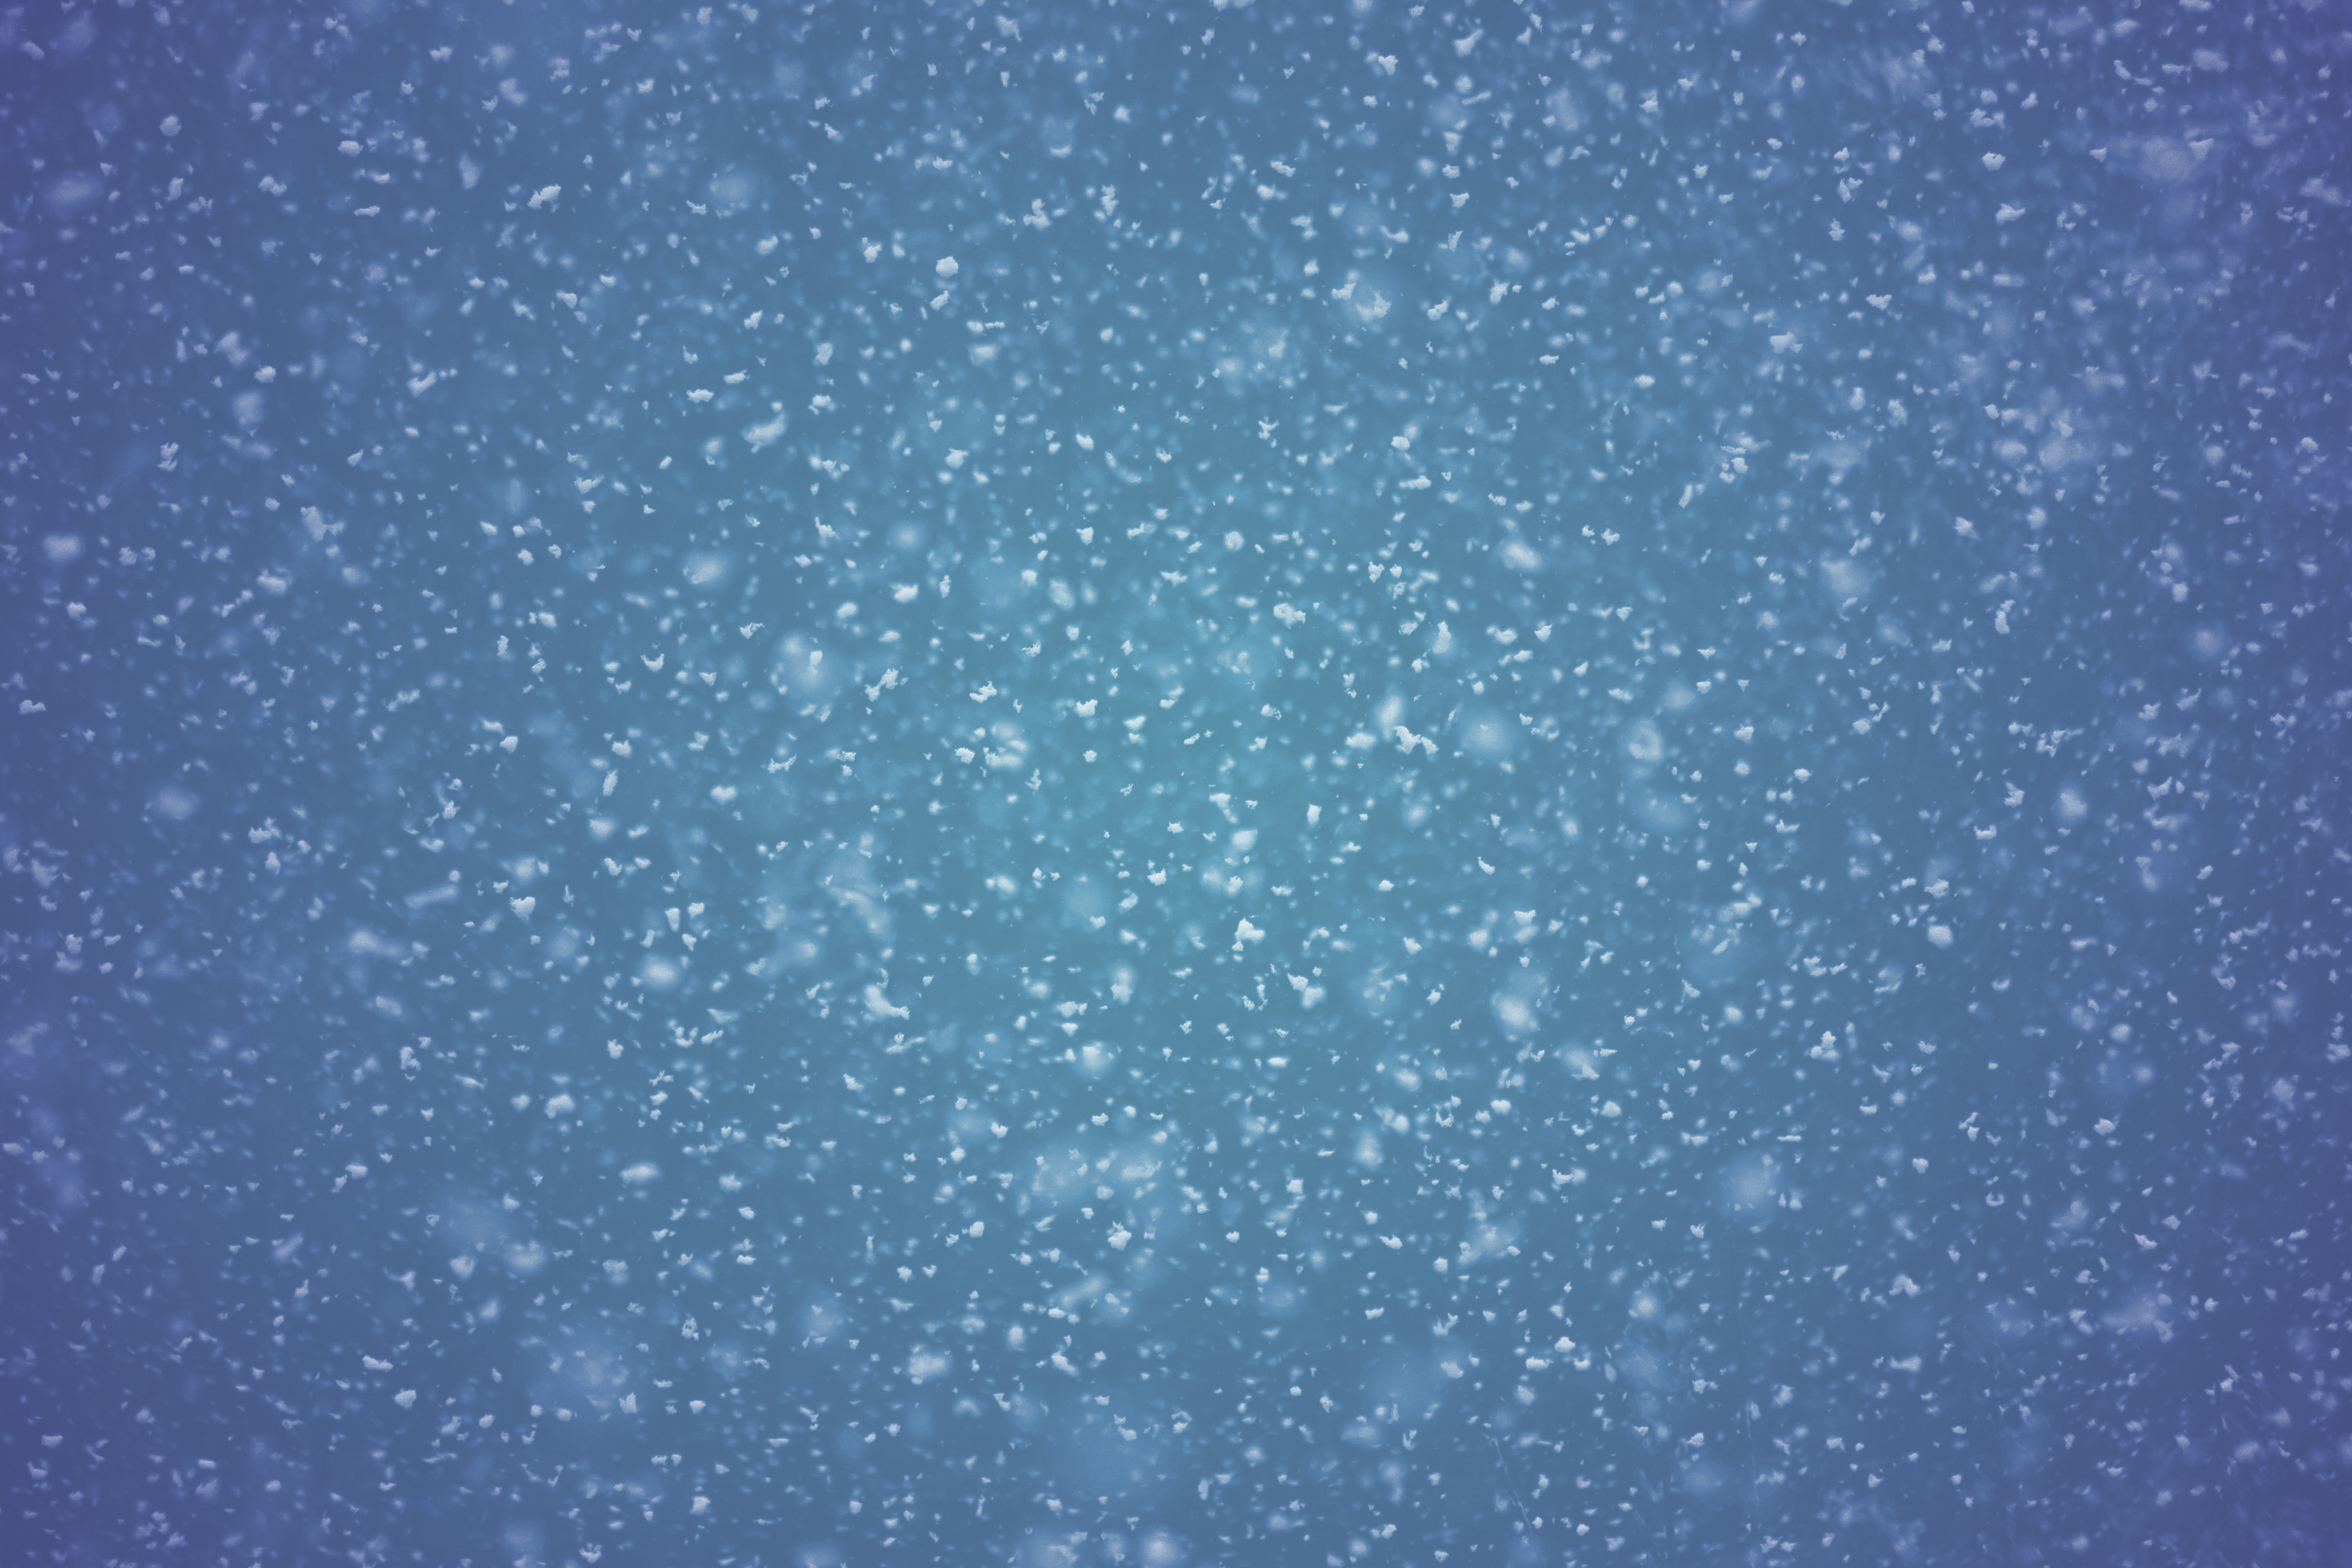 Falling snow wallpaper 2015 – Grasscloth Wallpaper